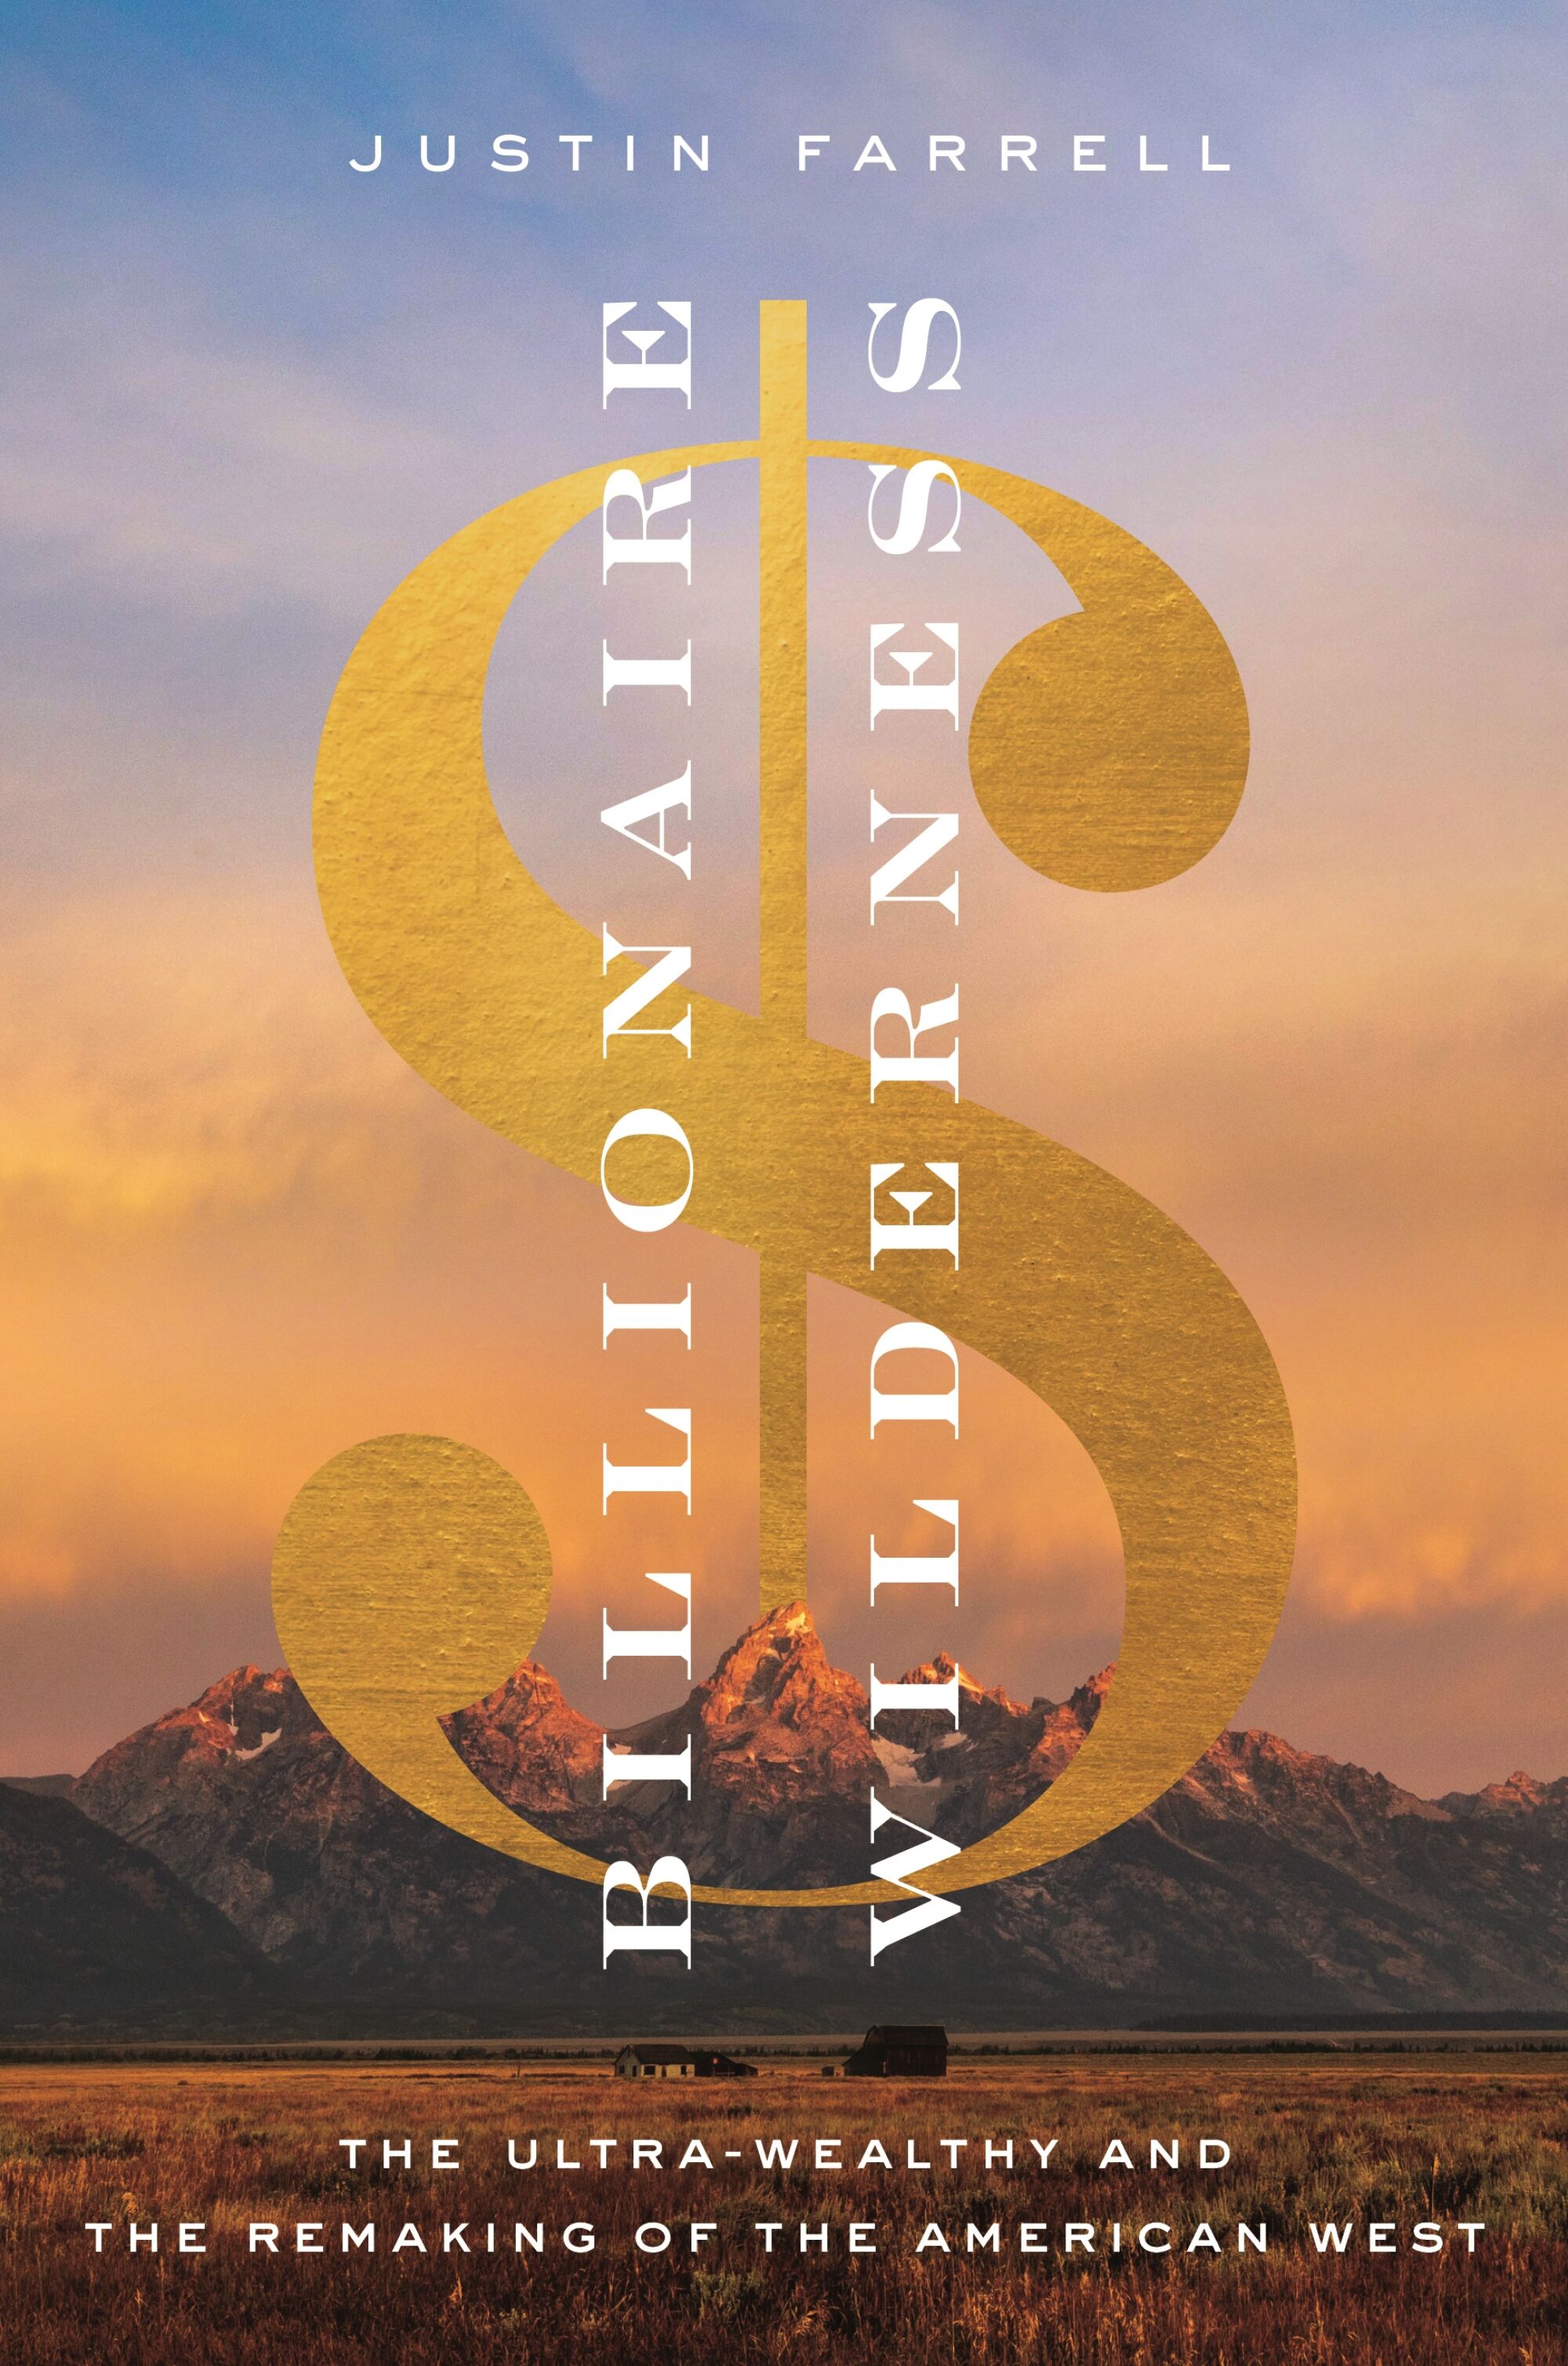 A book jacket for Justin Jarrell's "Billionaire Wilderness." Credit: Princeton University Press